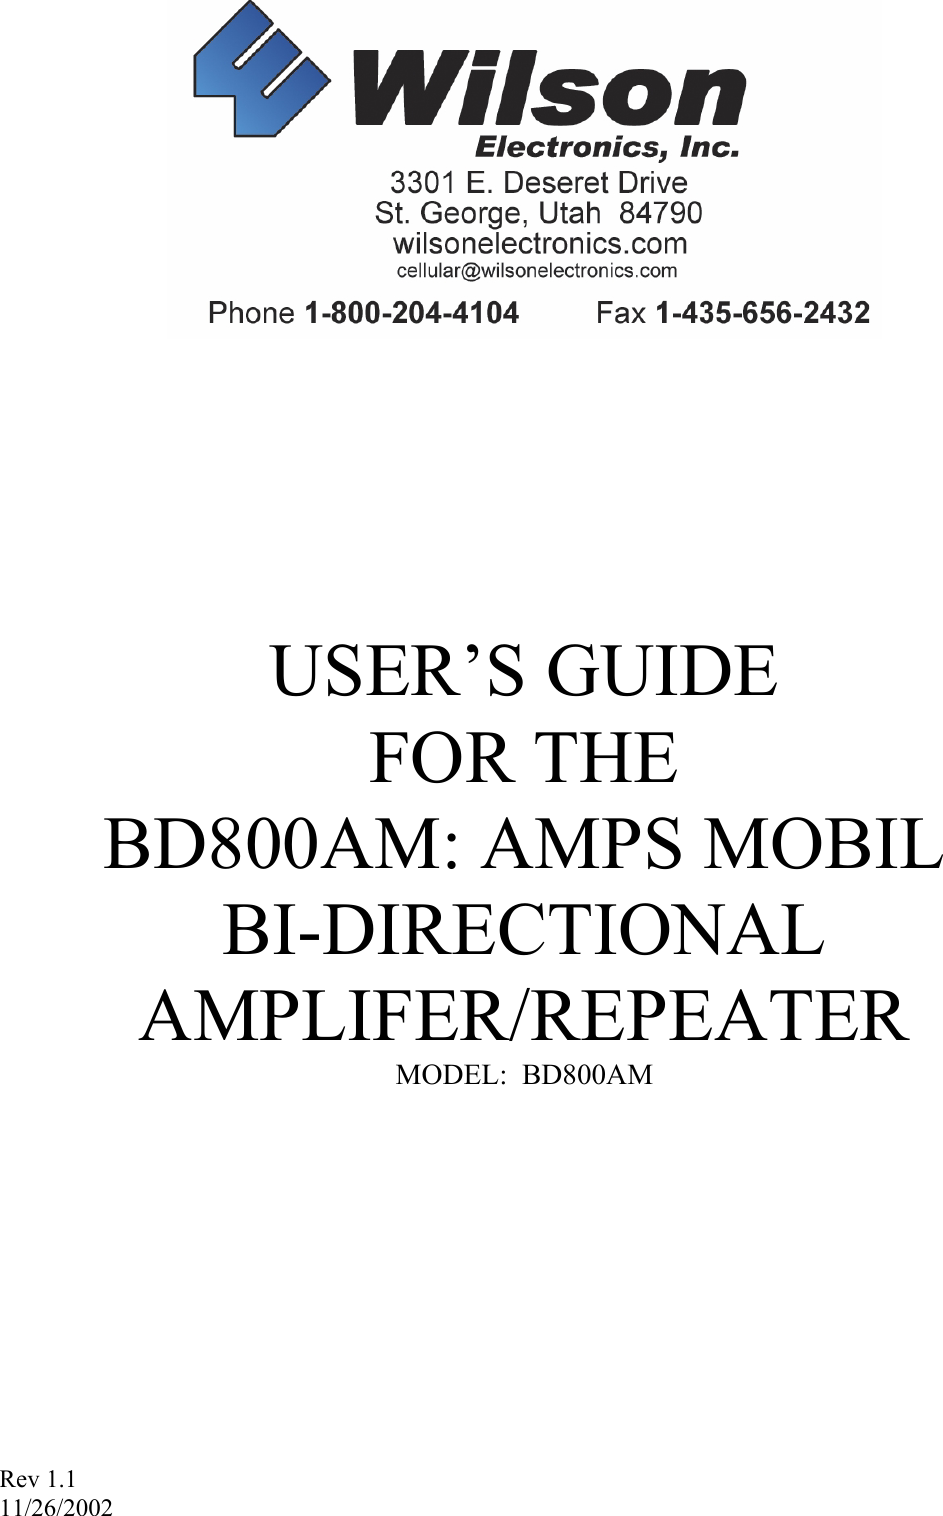  Rev 1.1                                                                                                                                          11/26/2002       USER’S GUIDE  FOR THE  BD800AM: AMPS MOBIL  BI-DIRECTIONAL AMPLIFER/REPEATER MODEL:  BD800AM      